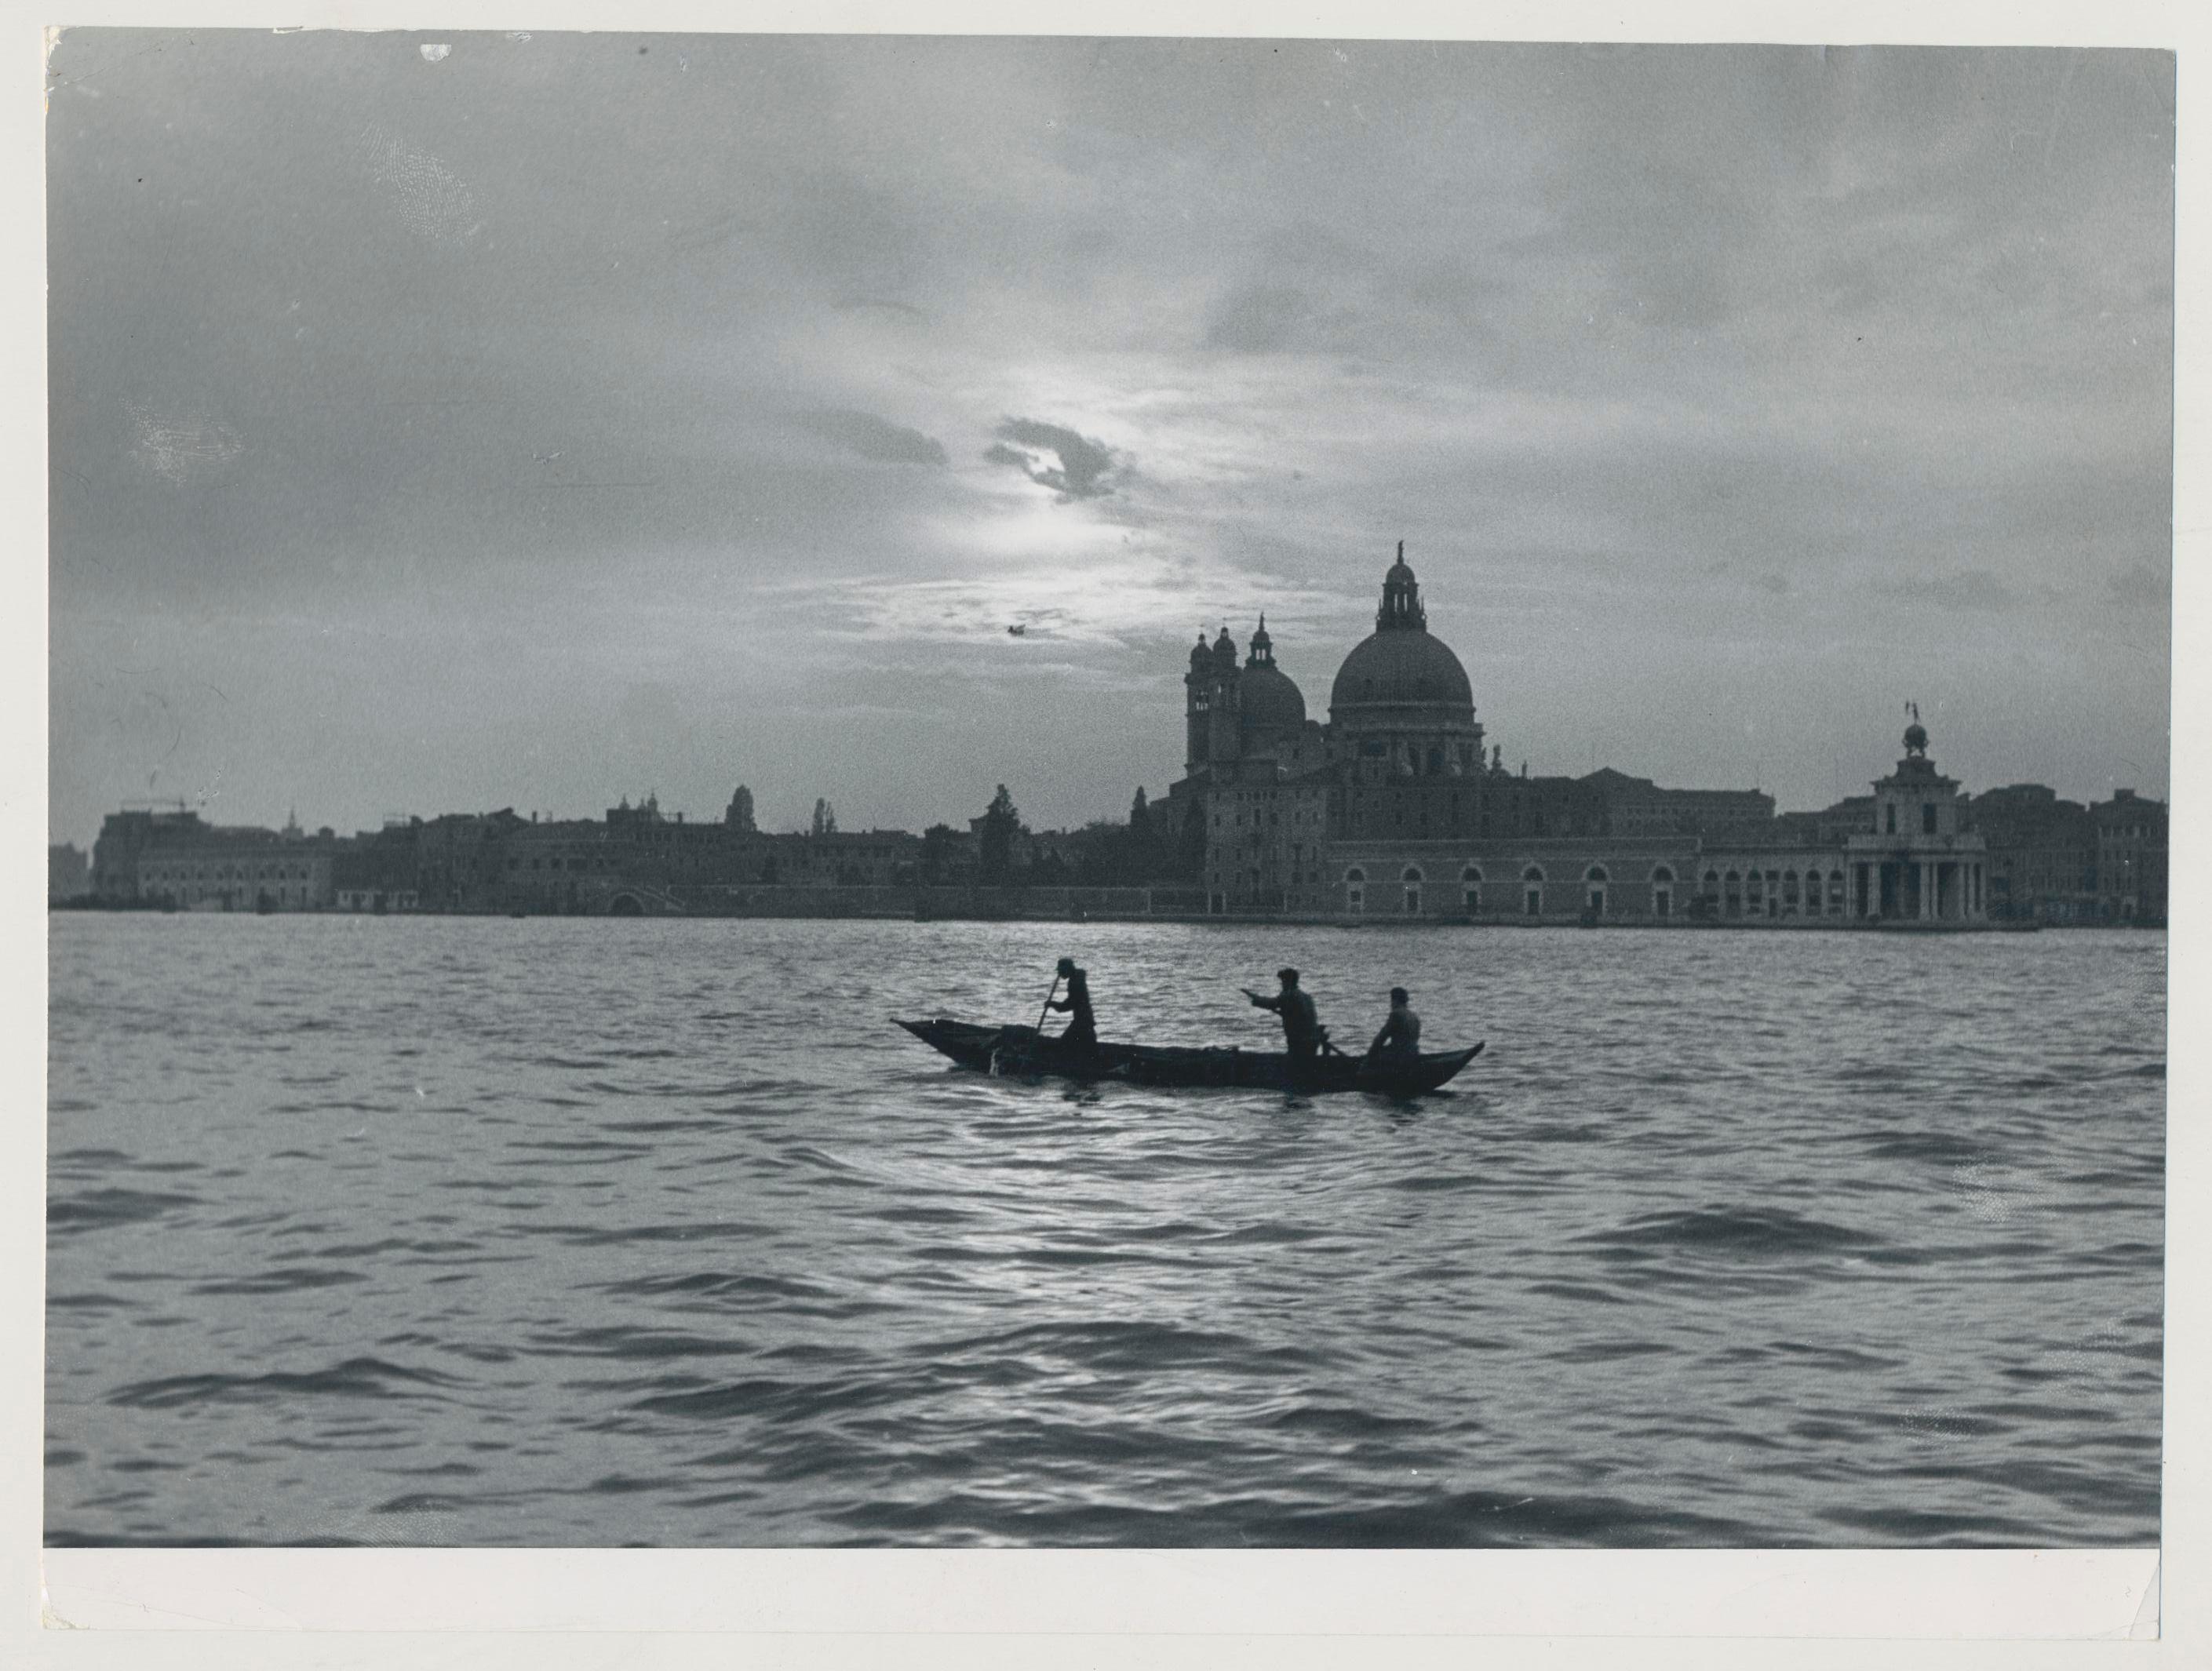 Venice - Gondola on Water with Skyline, Italy, 1950s, 17, 2 x 22, 8 cm